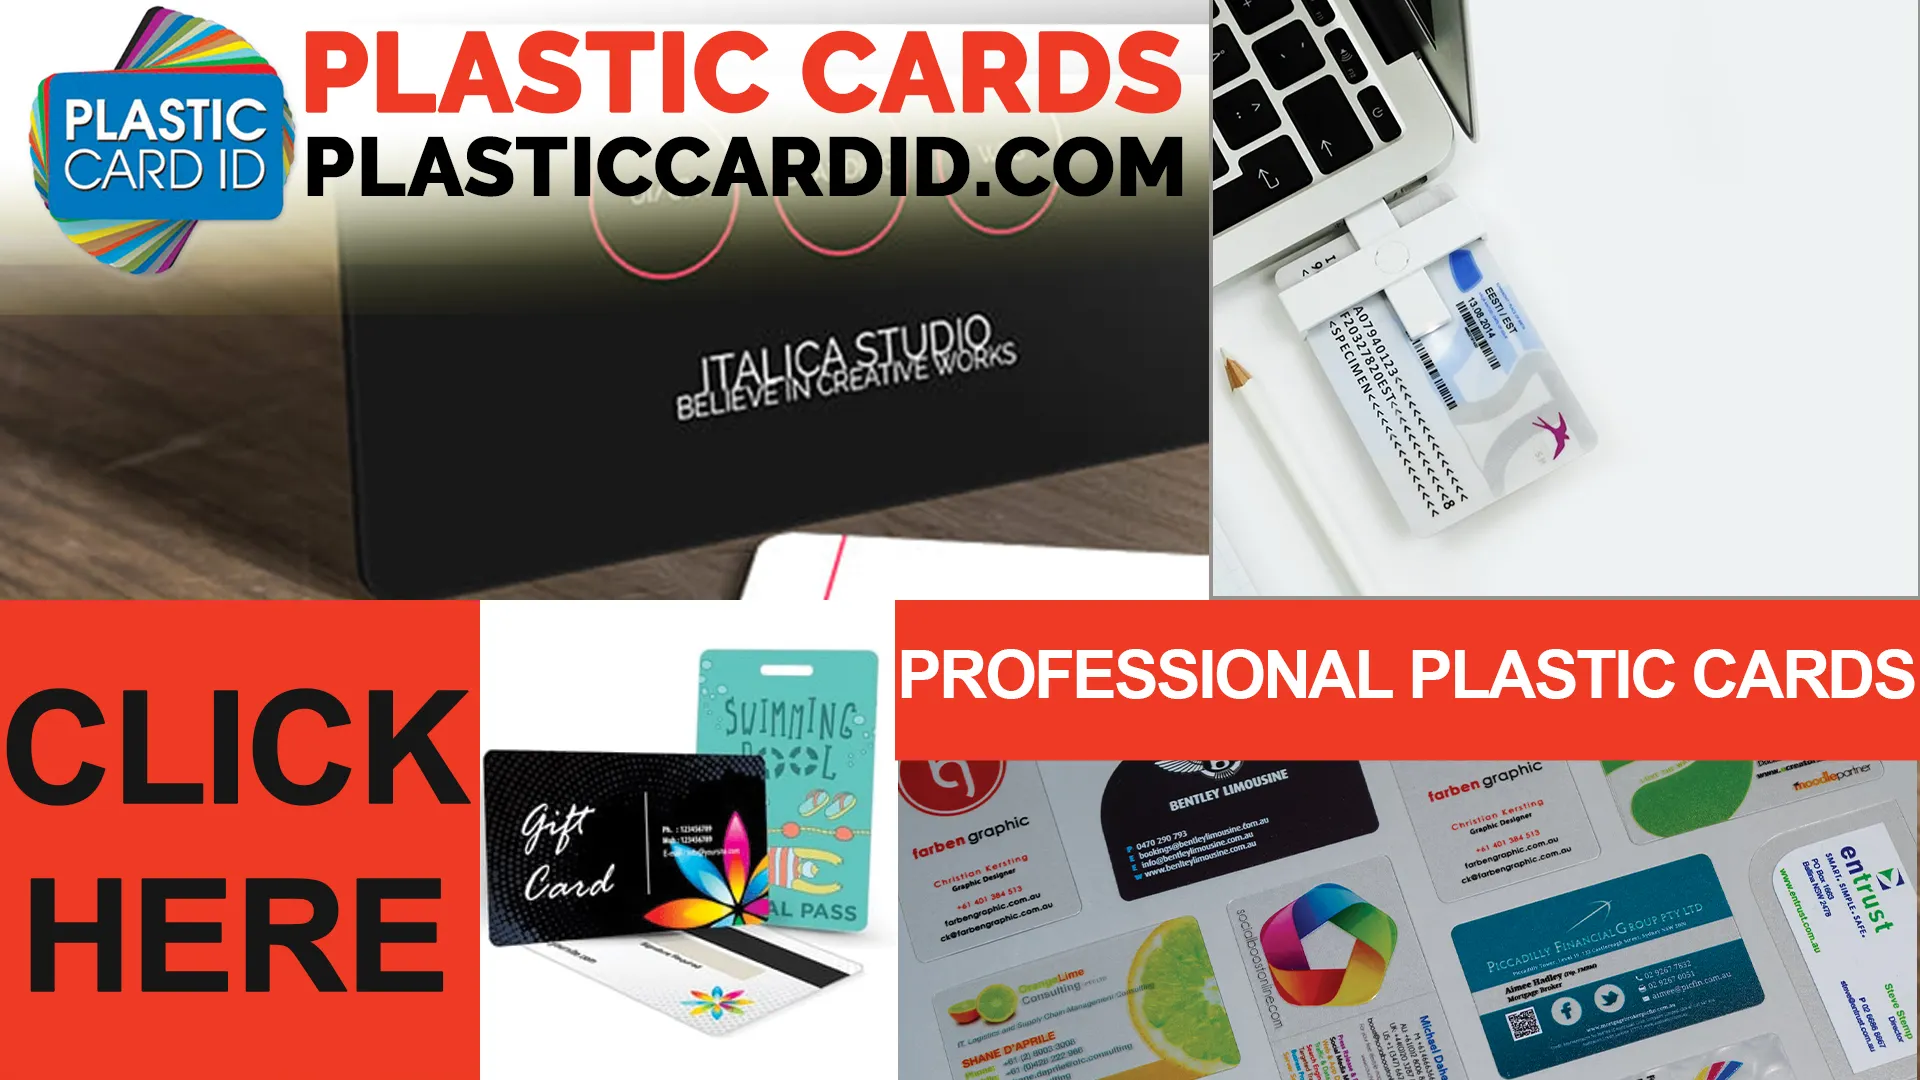 Plastic Card ID
: Locking in Longevity with Lasting Impressions